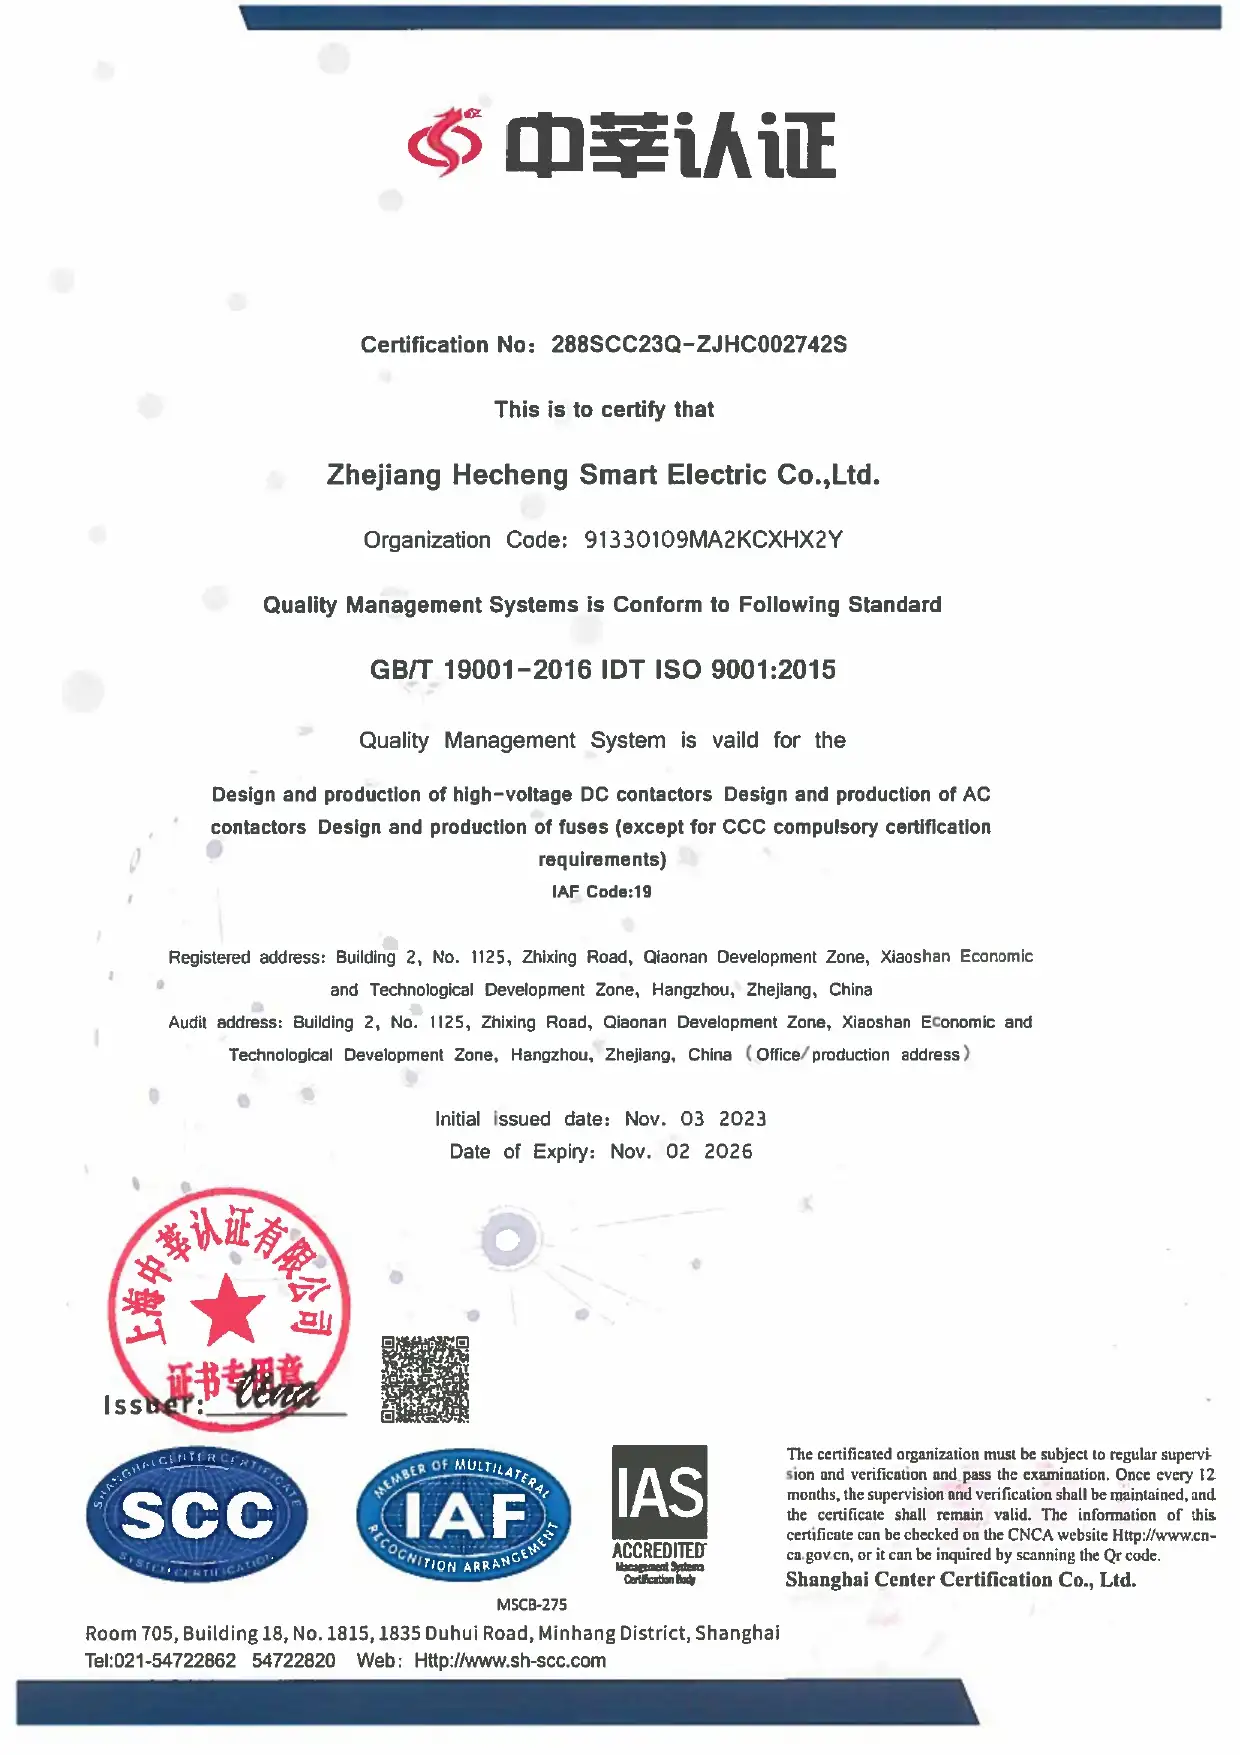 Hecheng IOS 9001 certification